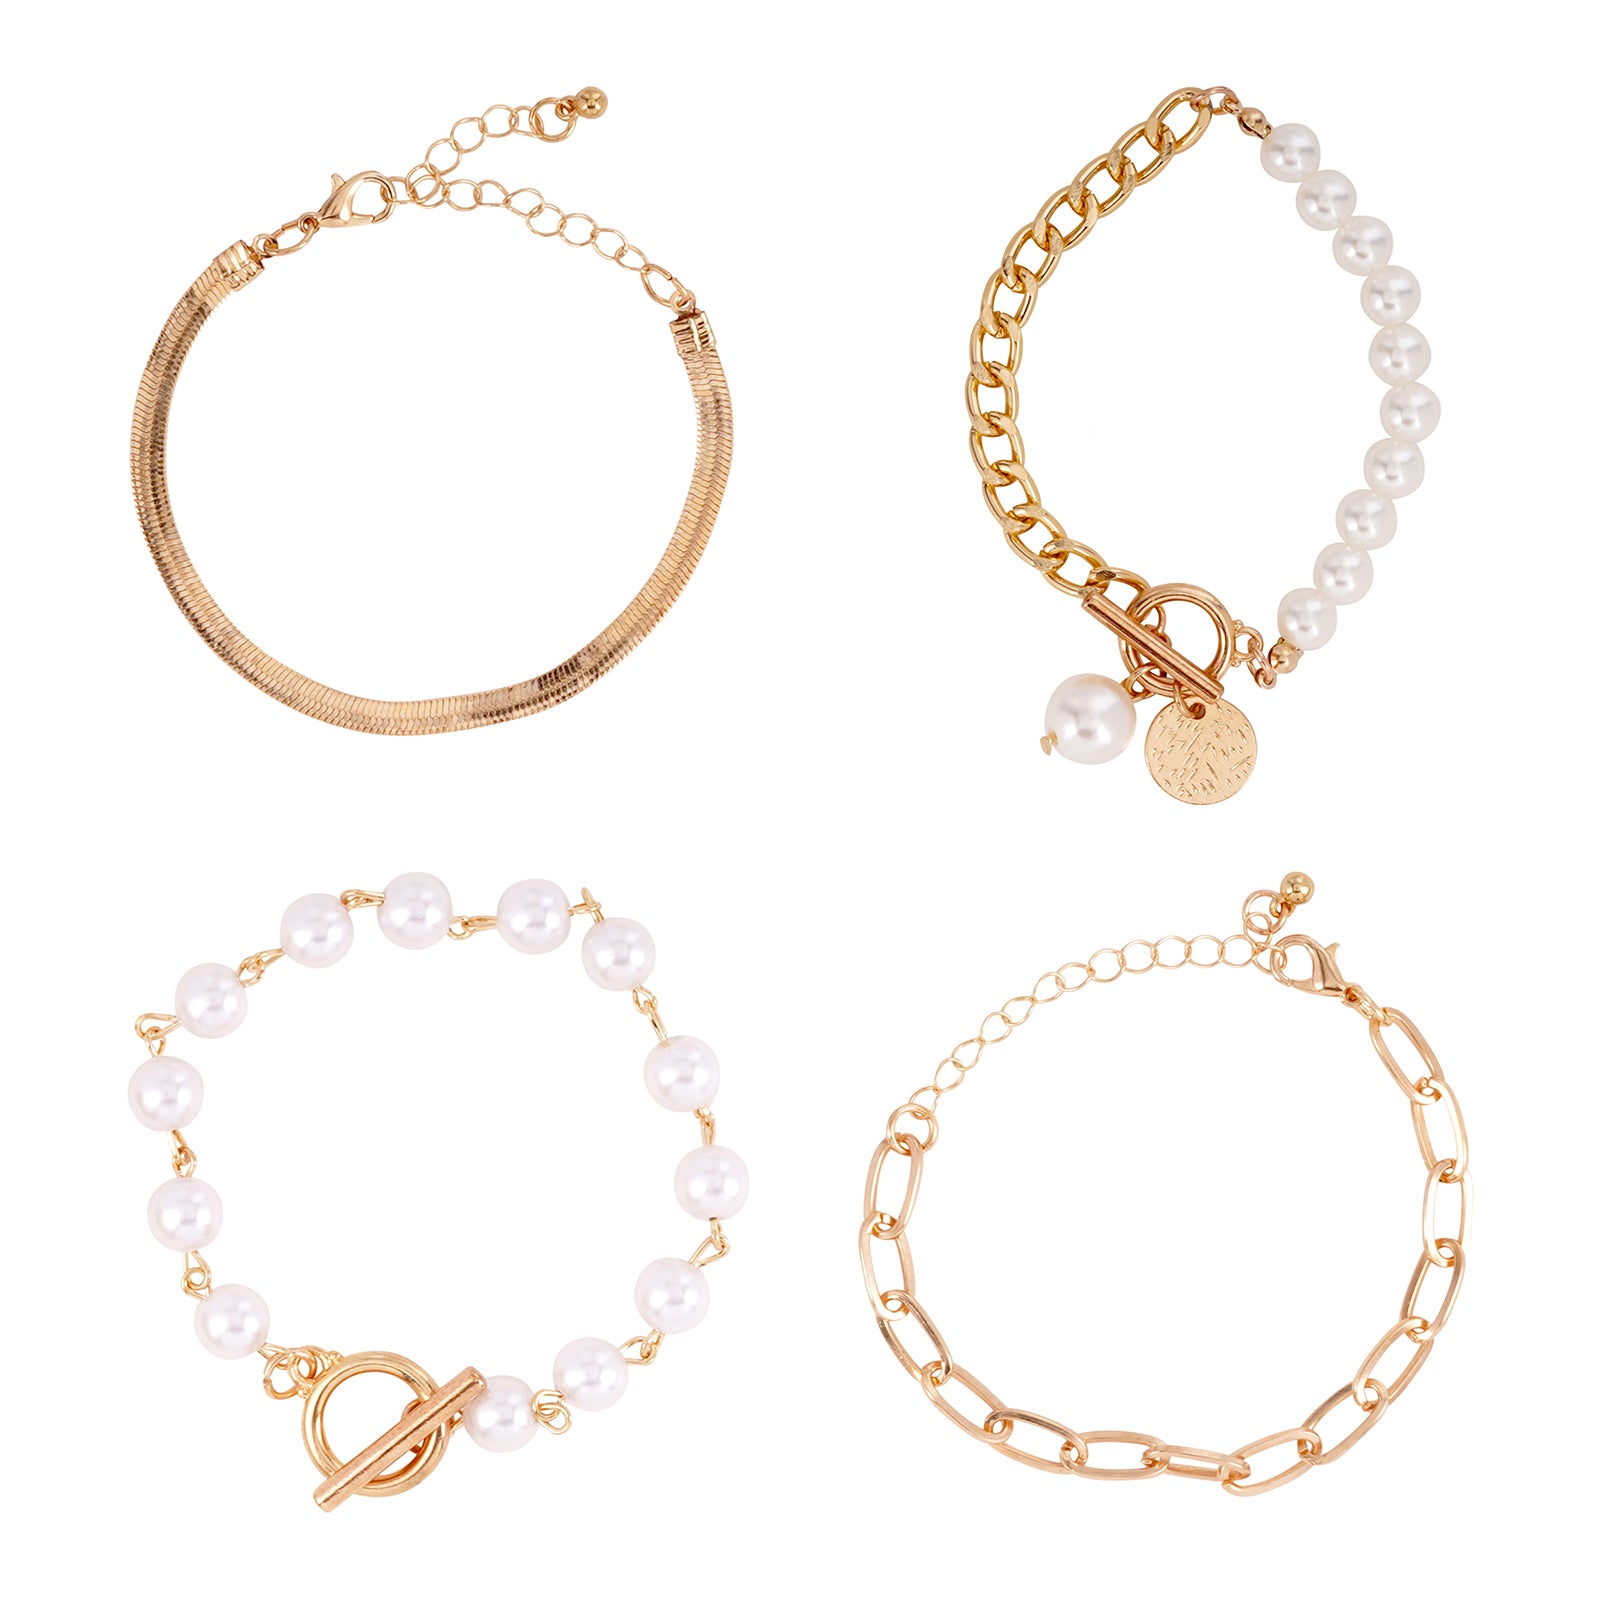 Our bracelets – Juvetti